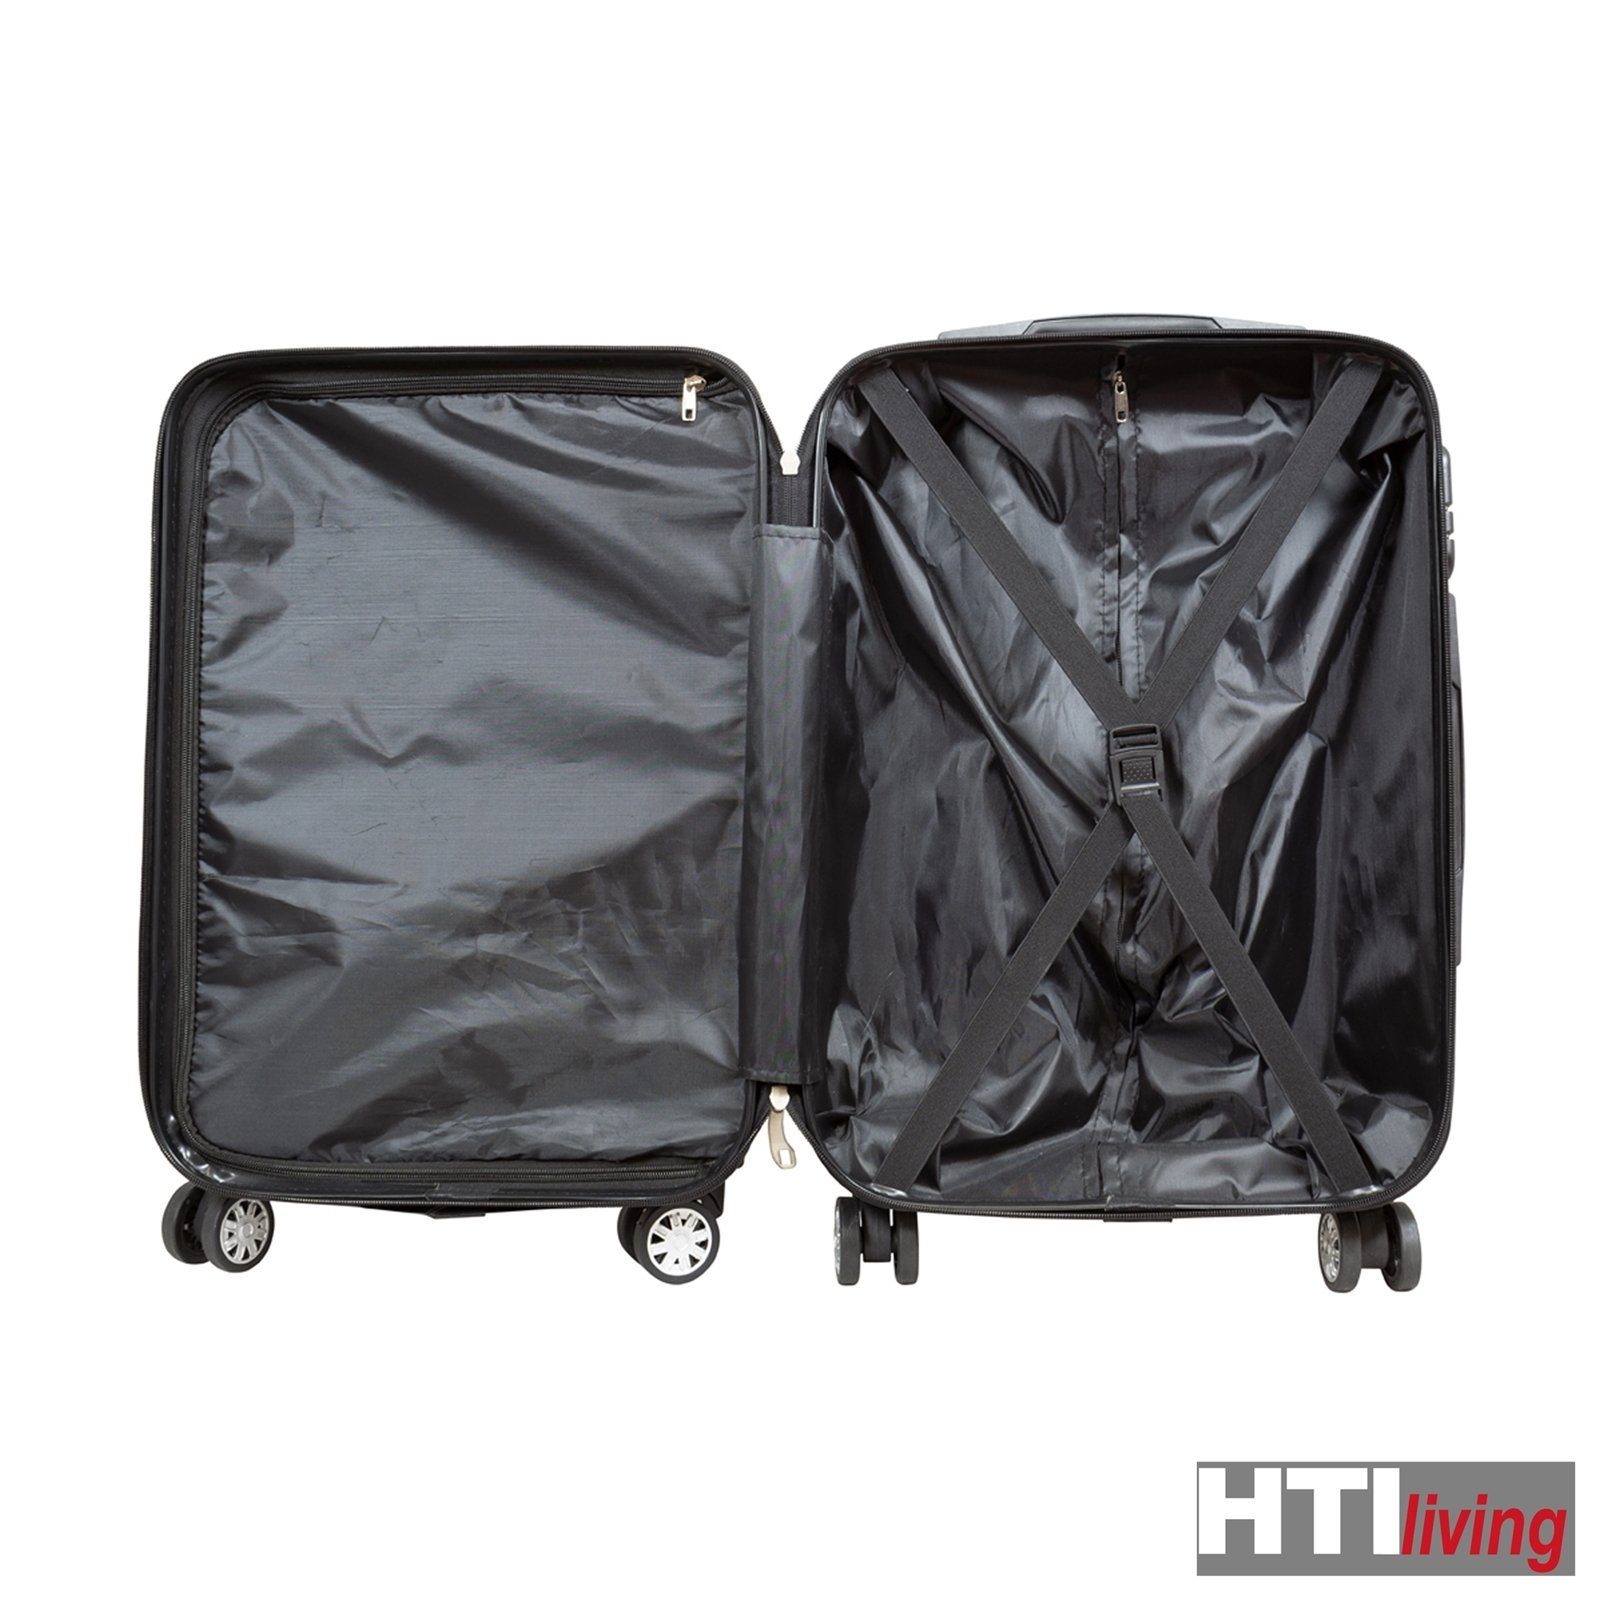 HTI-Living Kofferset ABS (Set, Palma 3 Rollen, Champagner, tlg), 4 Reisegepäck Kofferset Hartschale 3-teilig Trolley